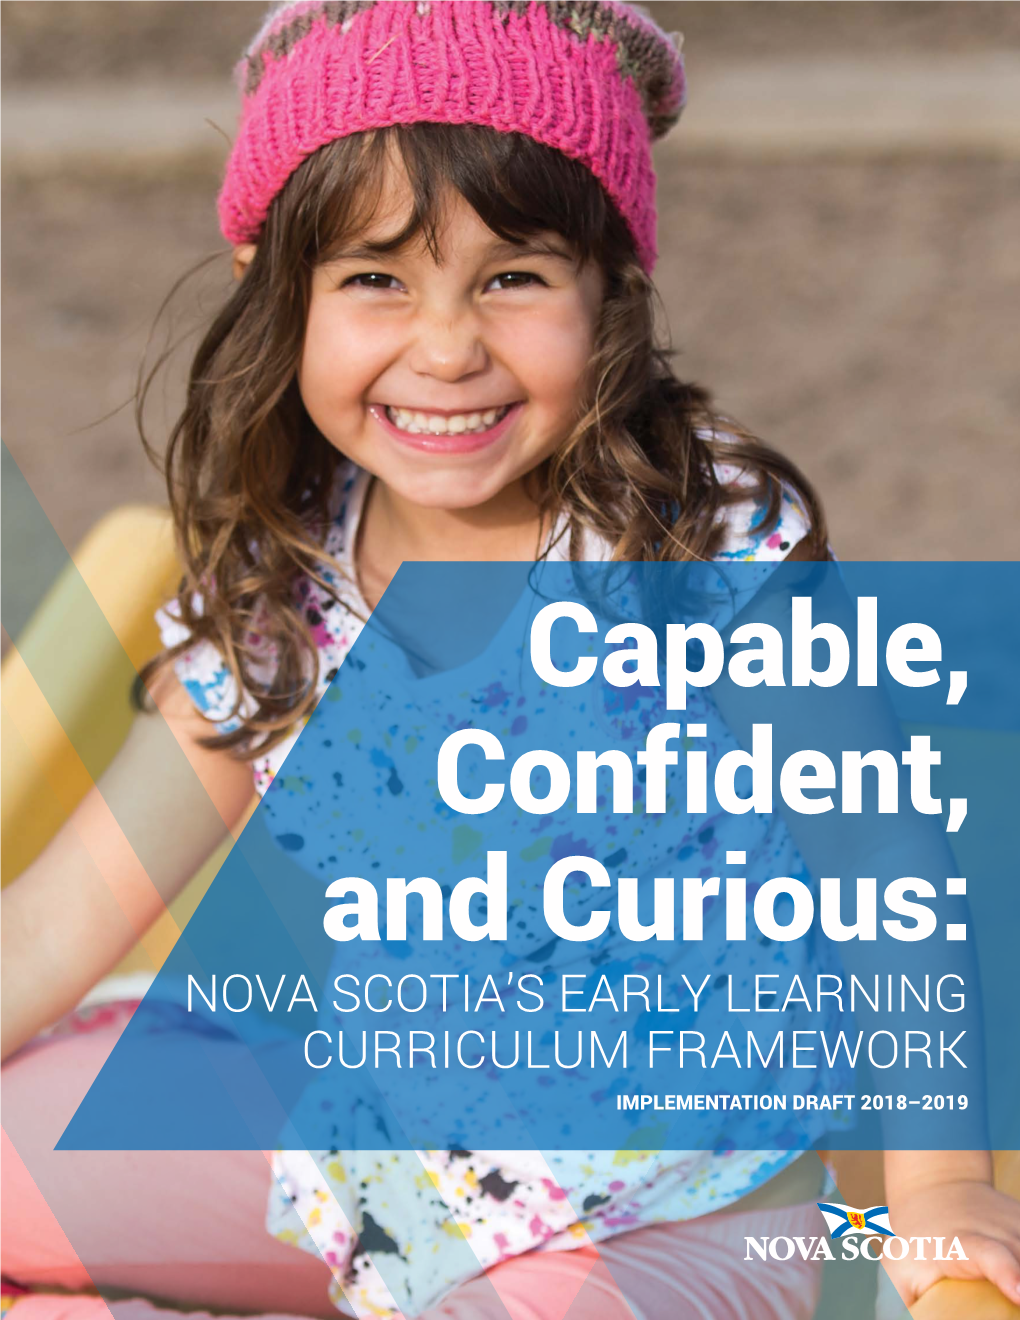 Nova Scotia's Early Learning Curriculum Framework